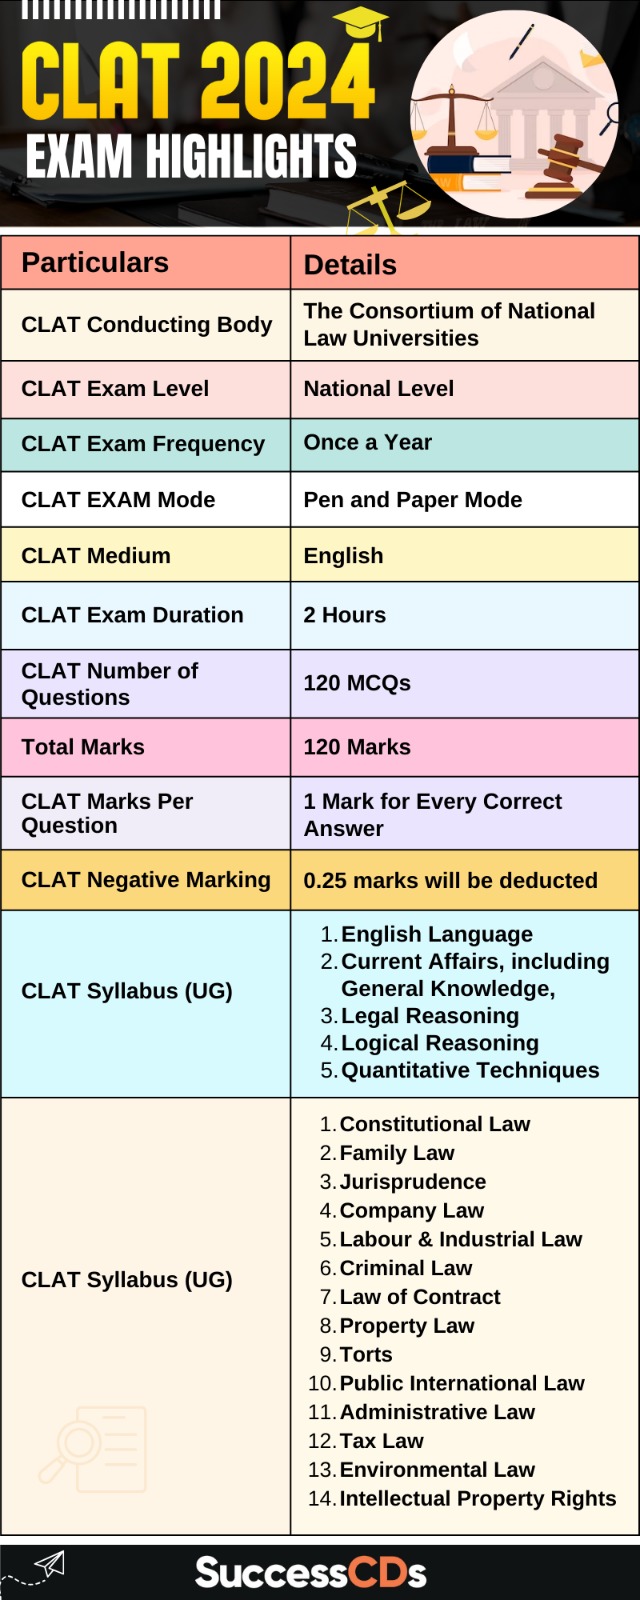 clat-exam-highlights